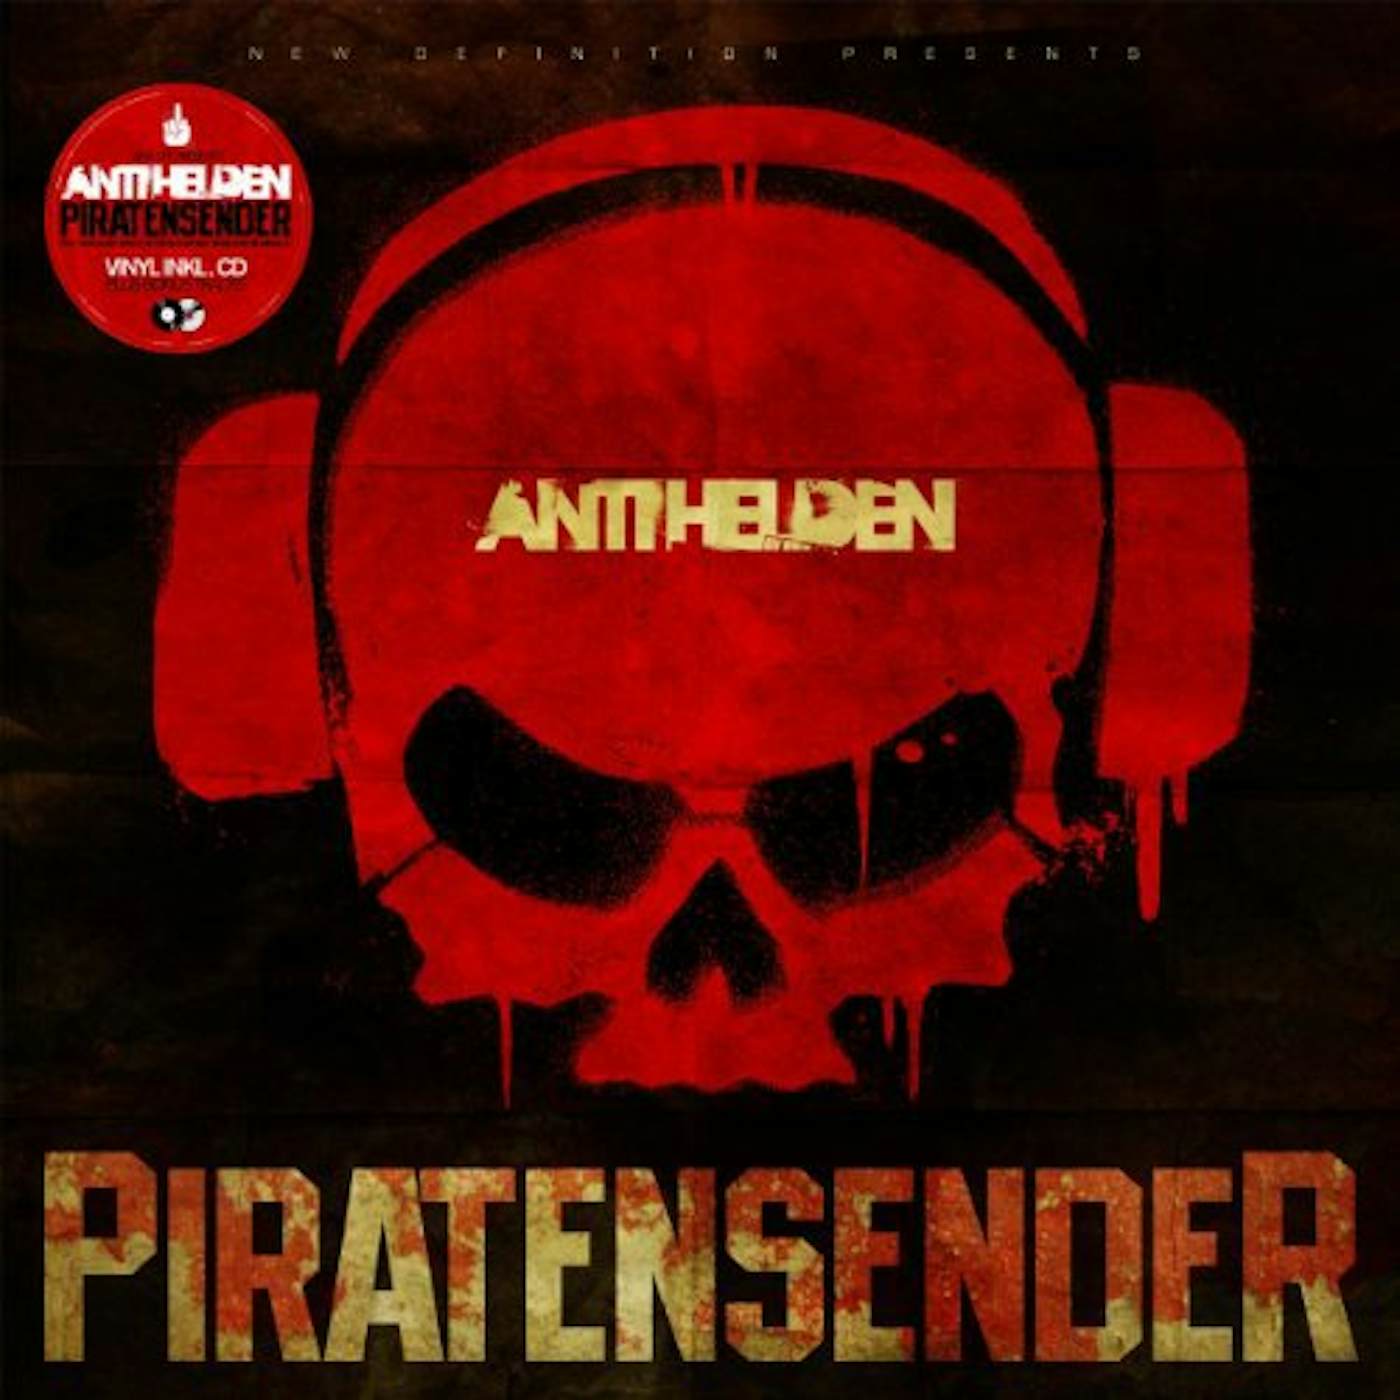 Antihelden Piratensender Vinyl Record